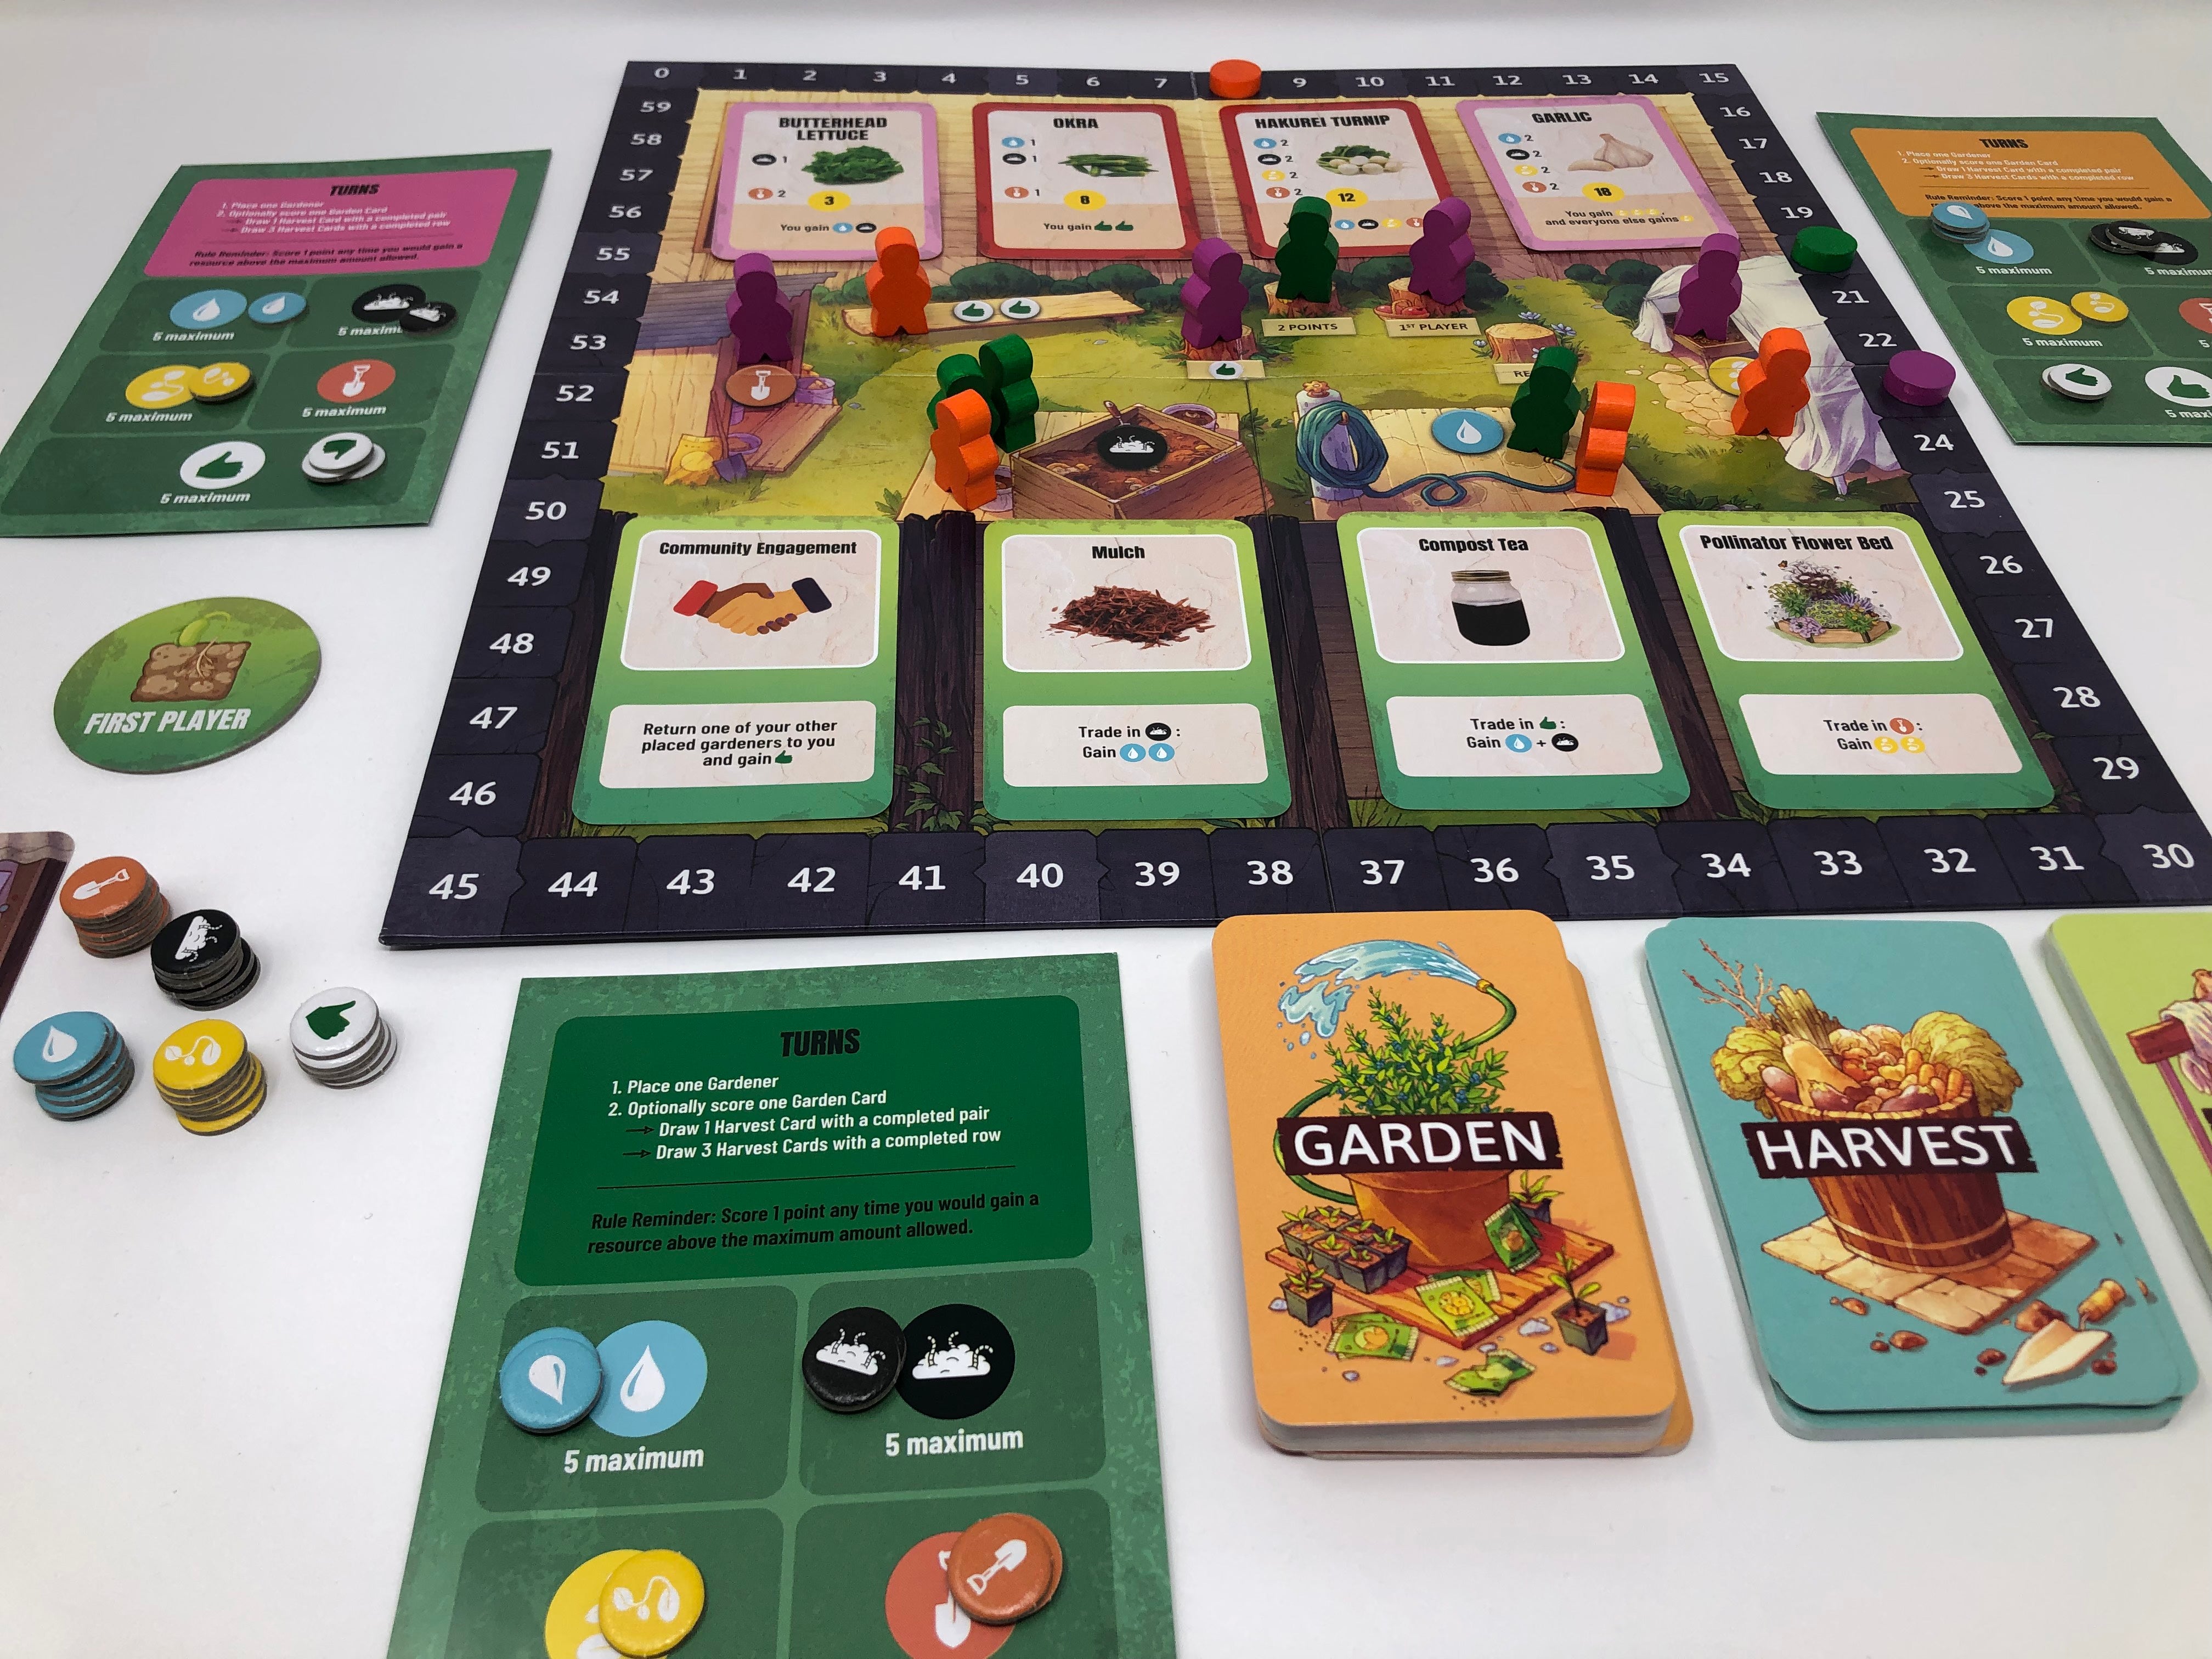 Community Garden: The Board Game